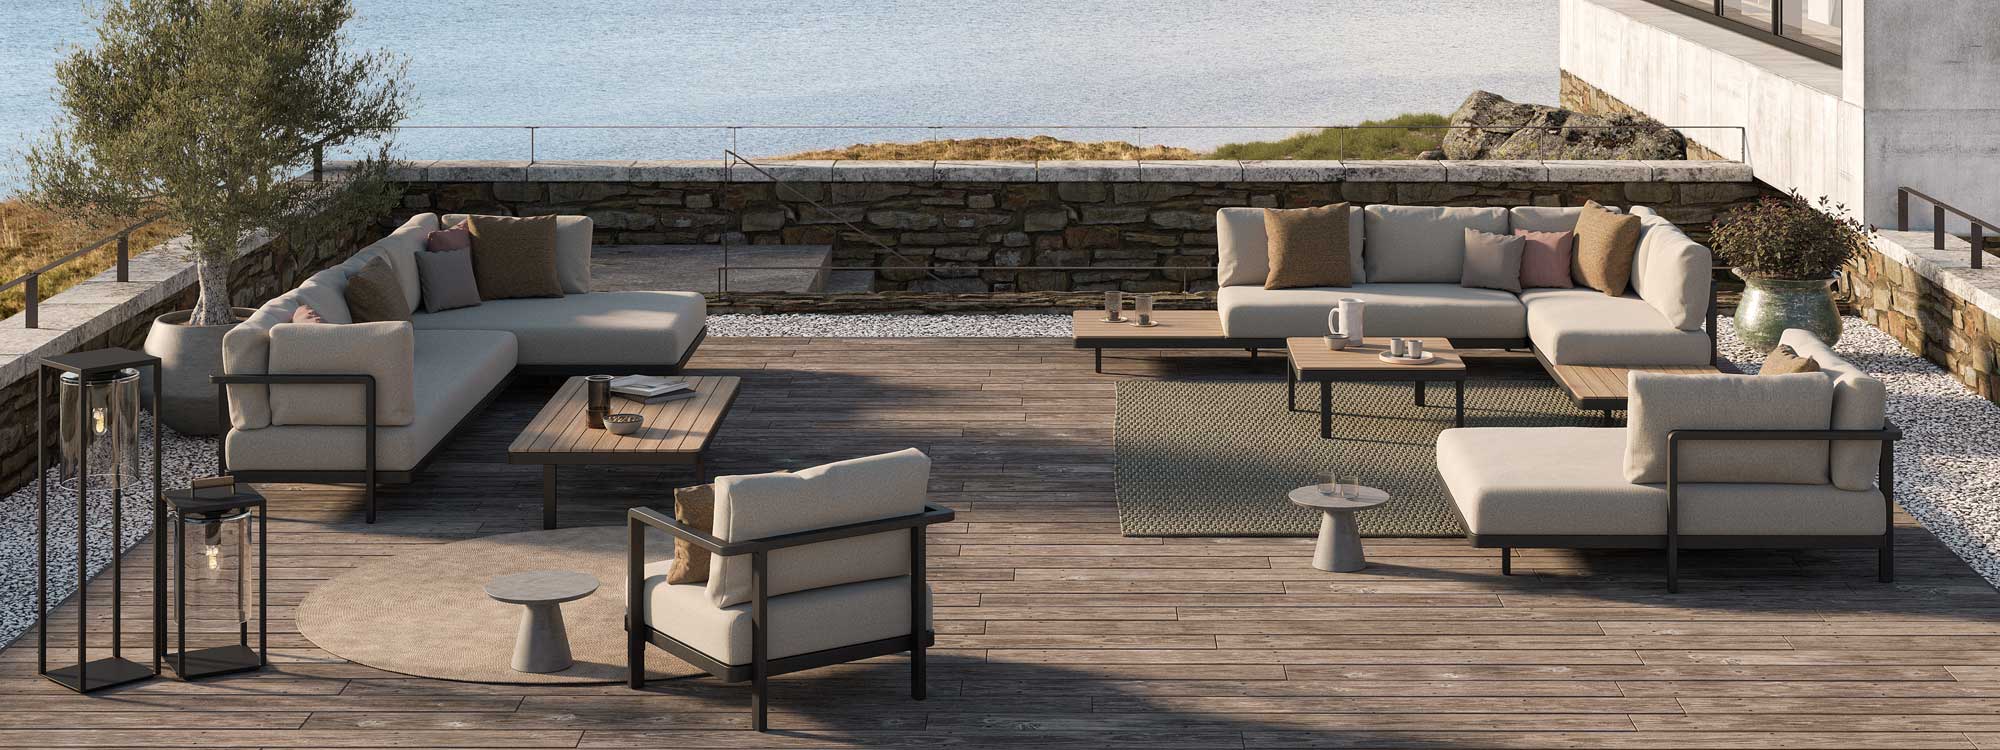 Image of 3 Alura Lounge designer garden corner sofas by Royal Botania on large wooden decked terrace